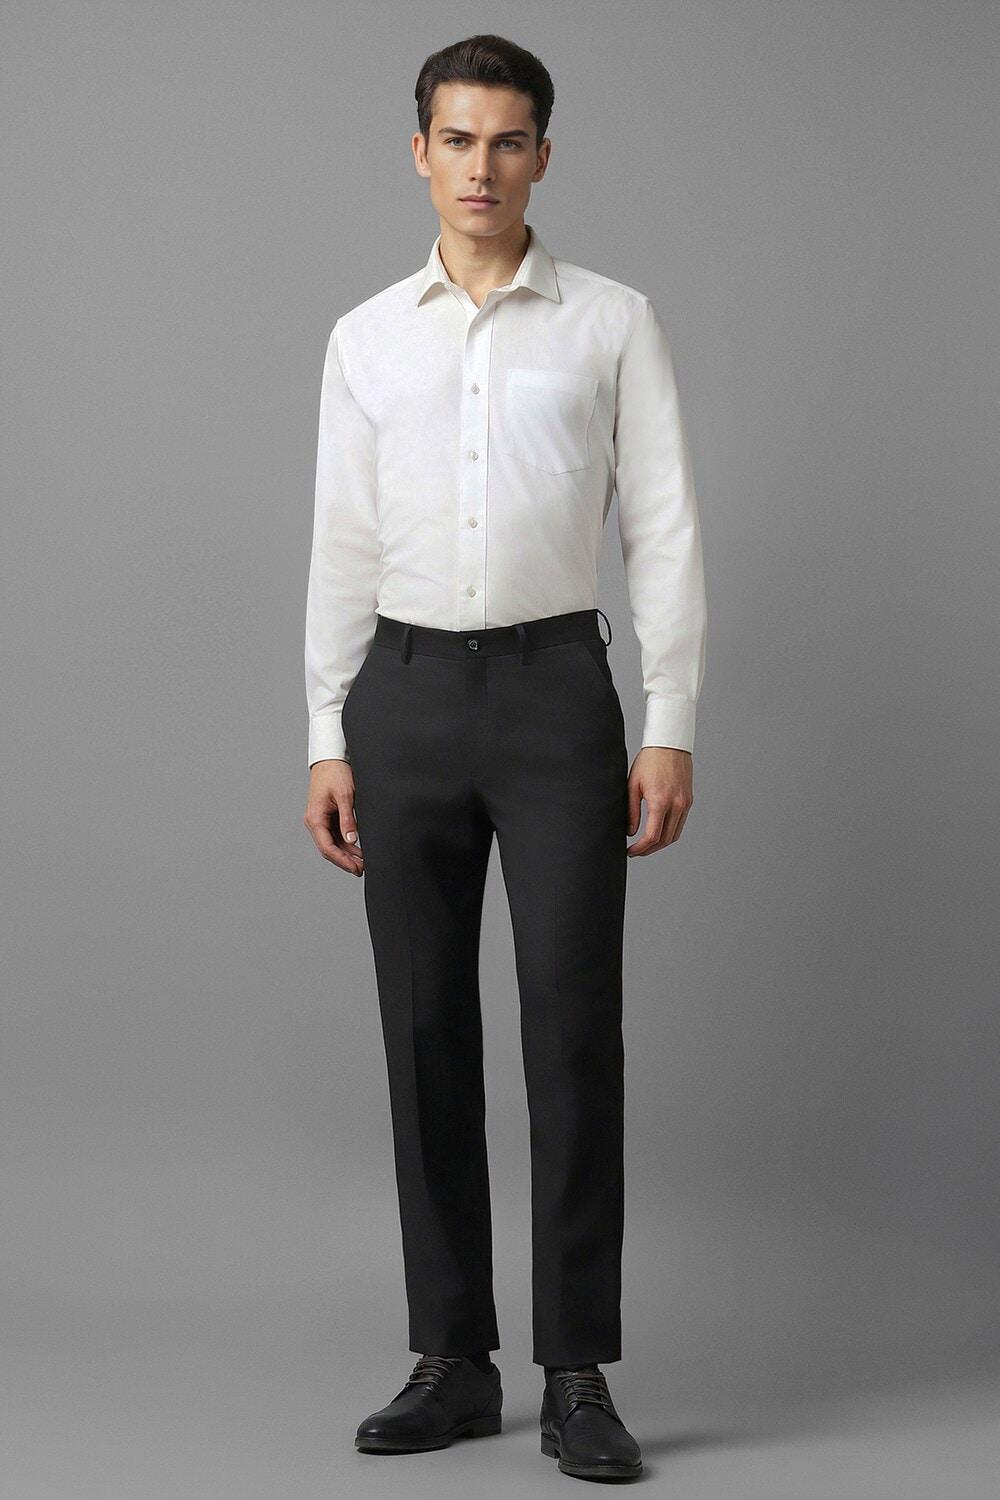 Black Slim Fit Solid Flat Front Formal Trousers For Men